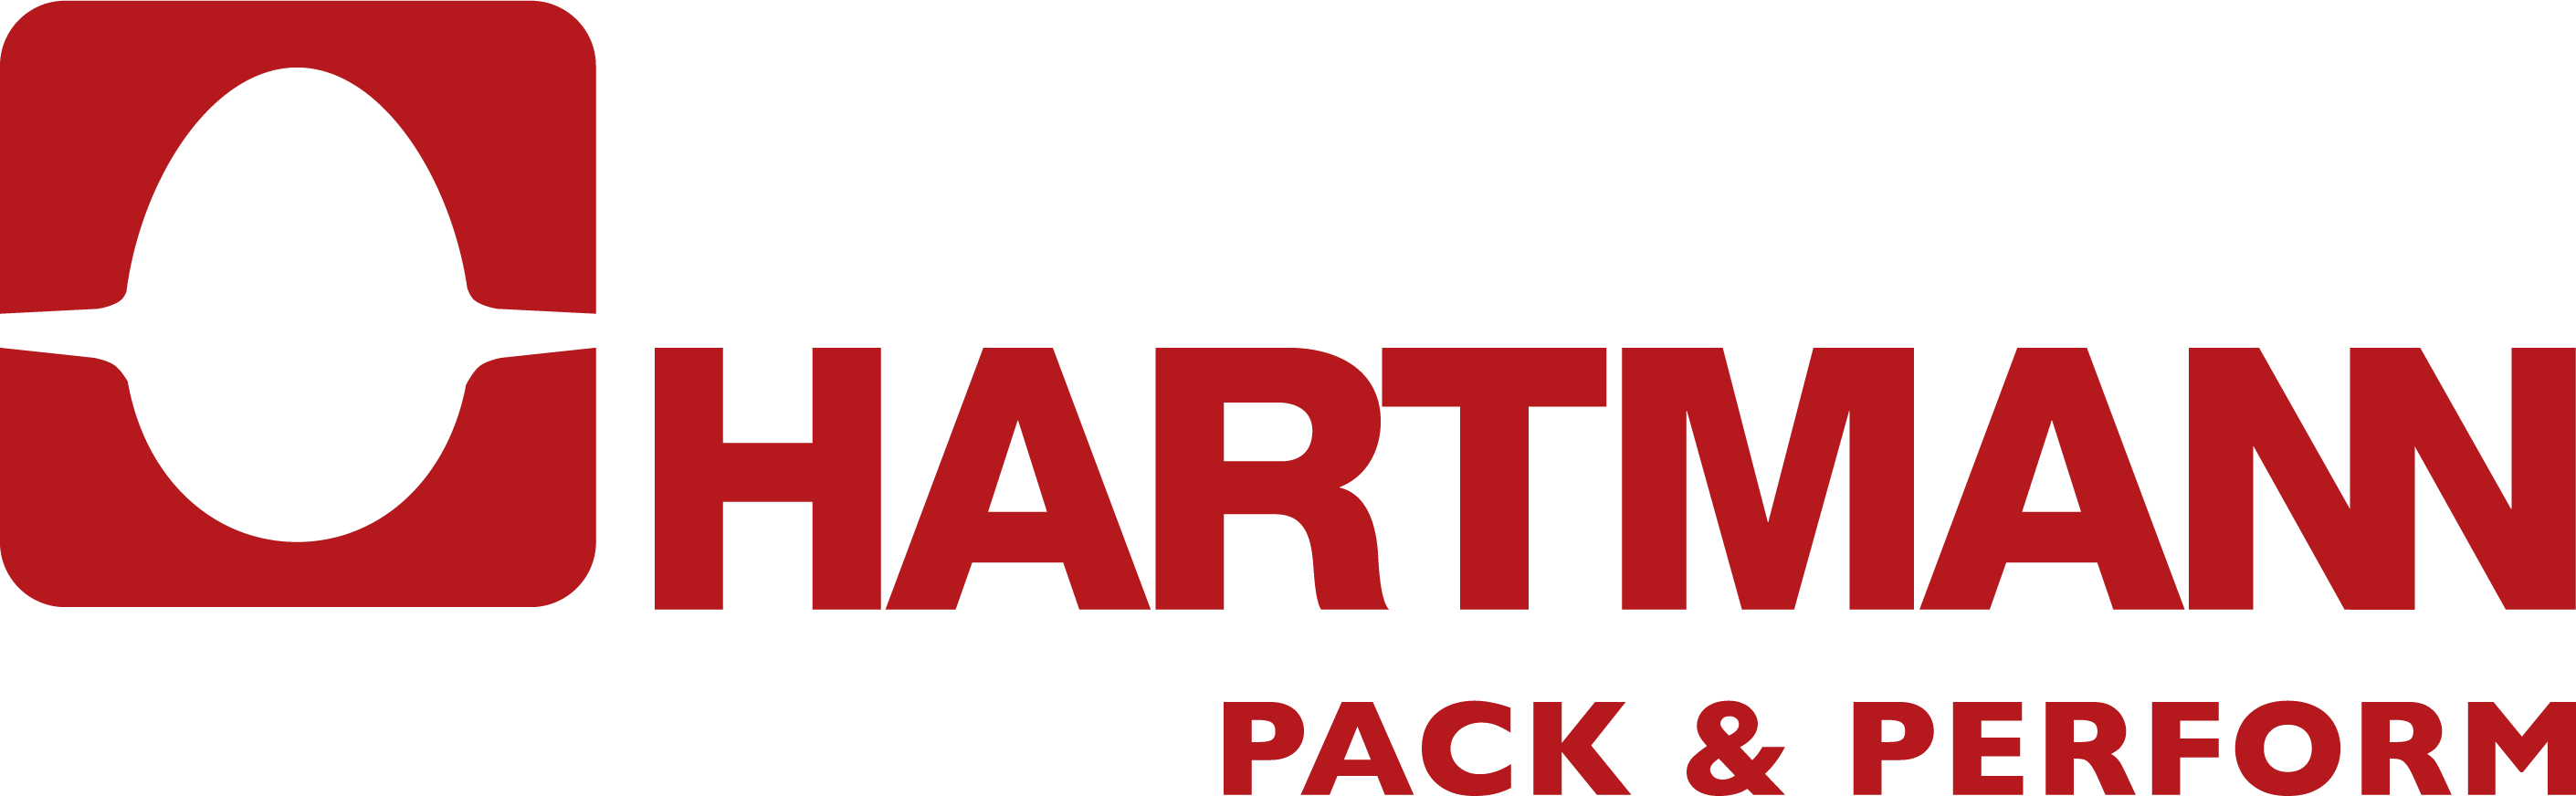 Hartmann Verpackung Logo